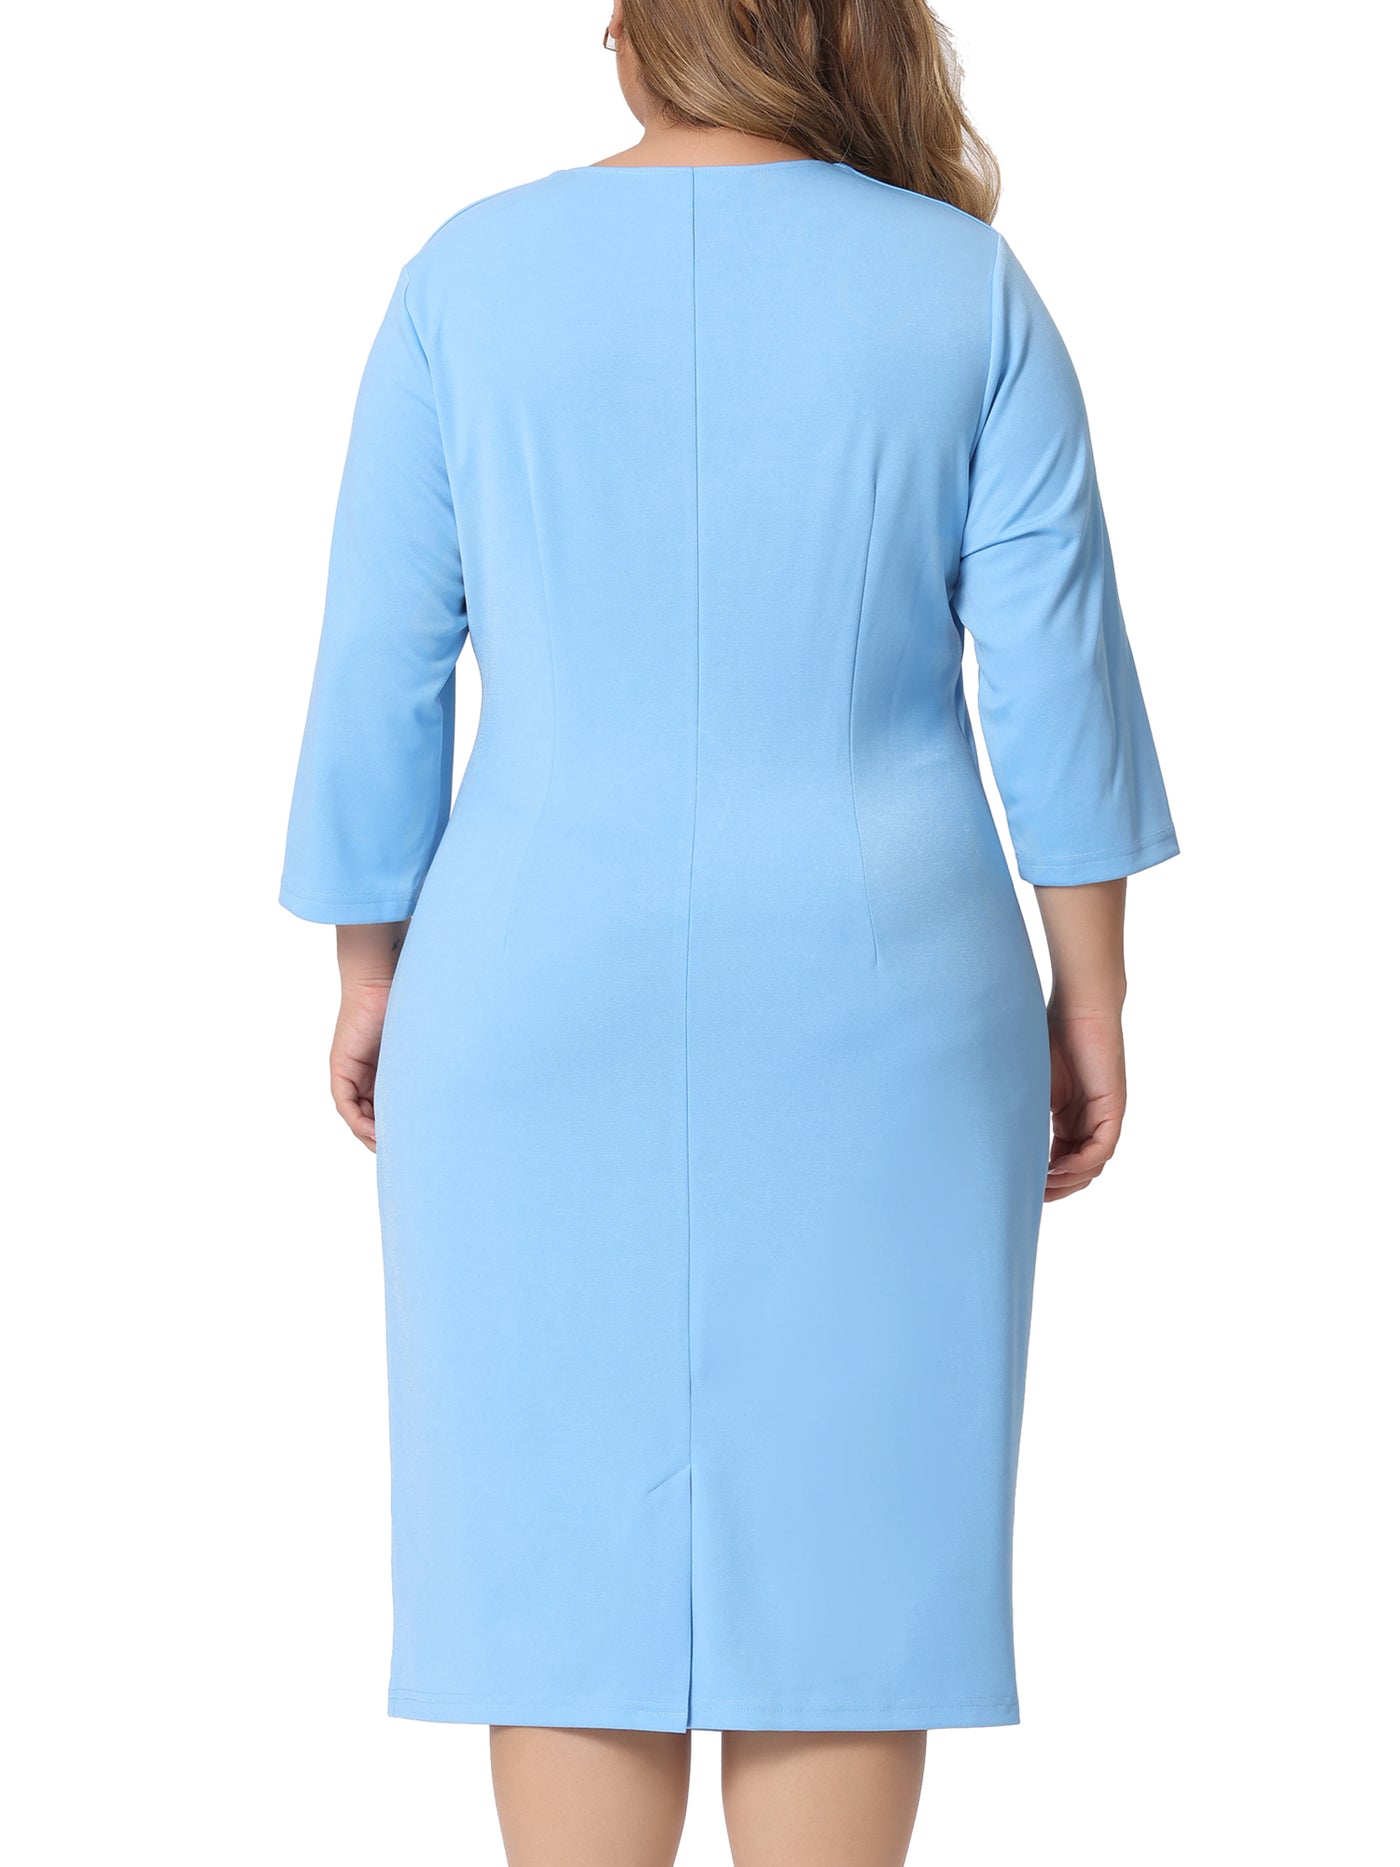 Bublédon Plus Size Dress for Women Square Neck Half Sleeve Pleated Front Sheath Dresses